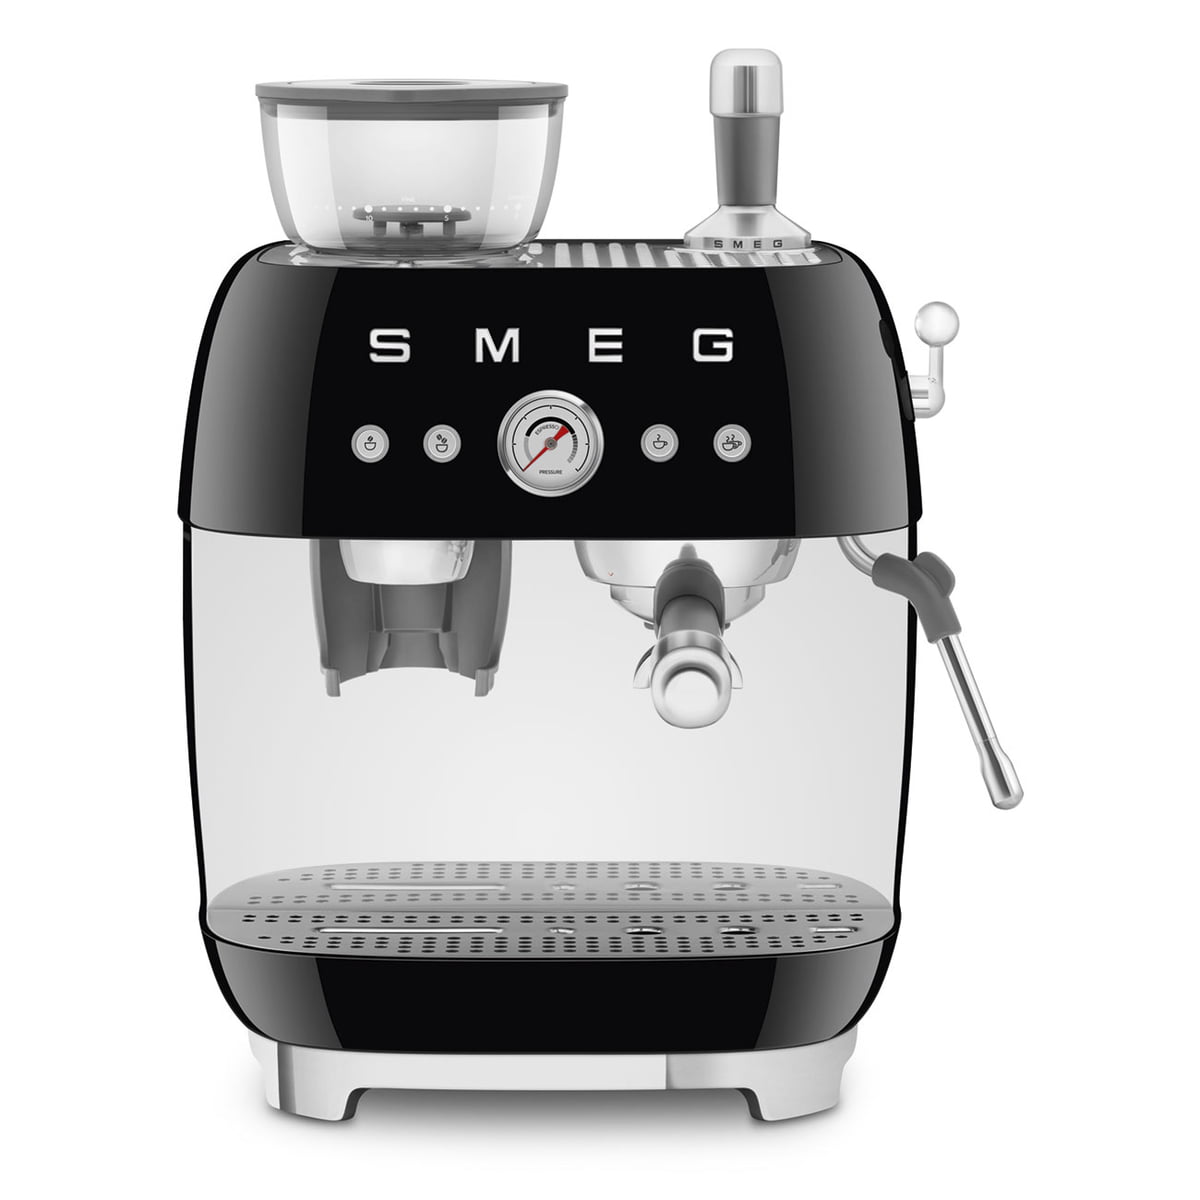 https://cdn.connox.com/m/100030/662202/media/Smeg/Siebtraeger-Espressomaschine/Smeg-Espressomaschine-mit-Siebtraeger-EGF03-schwarz.jpg